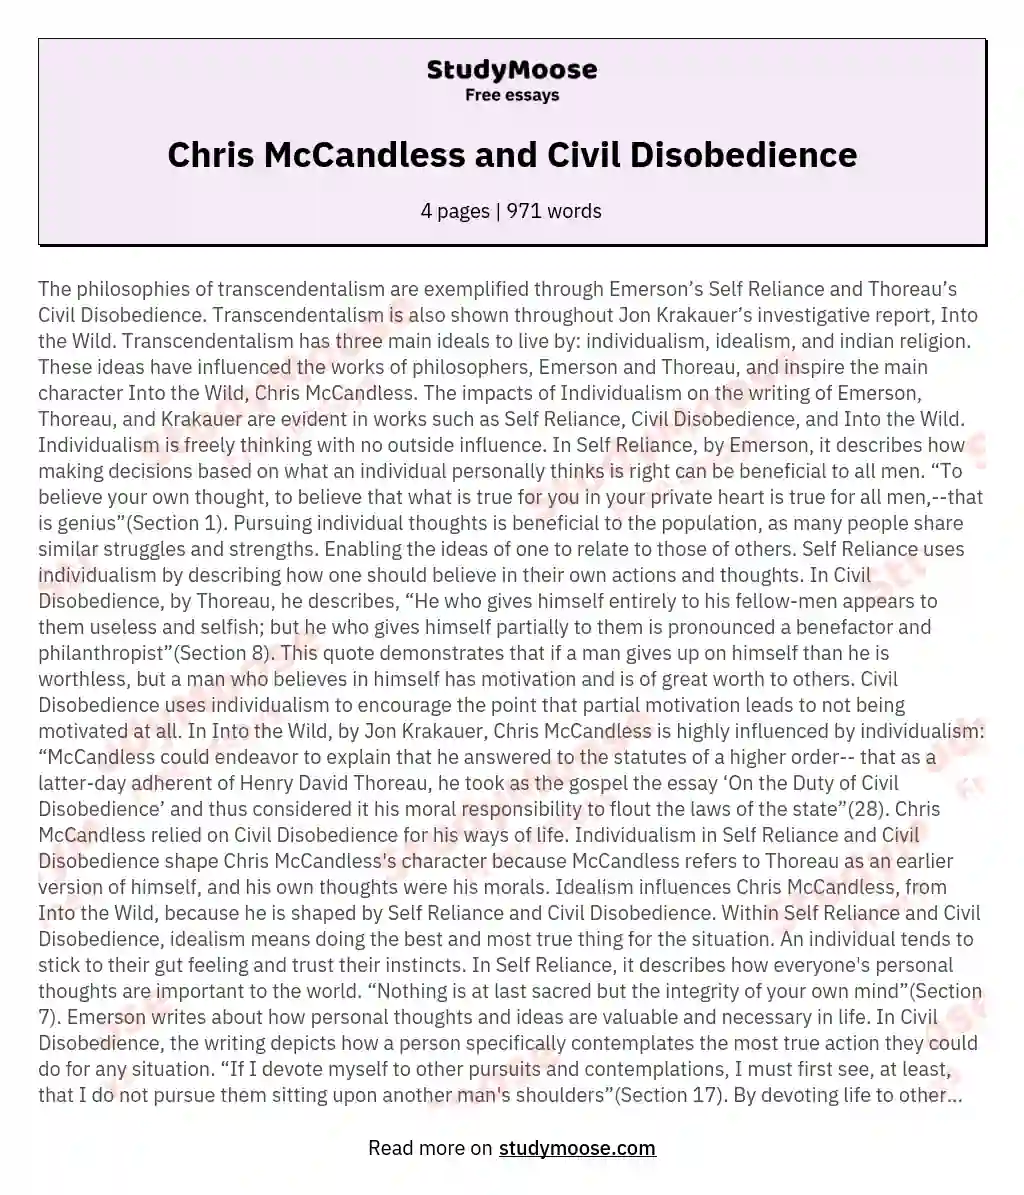 Chris McCandless and Civil Disobedience